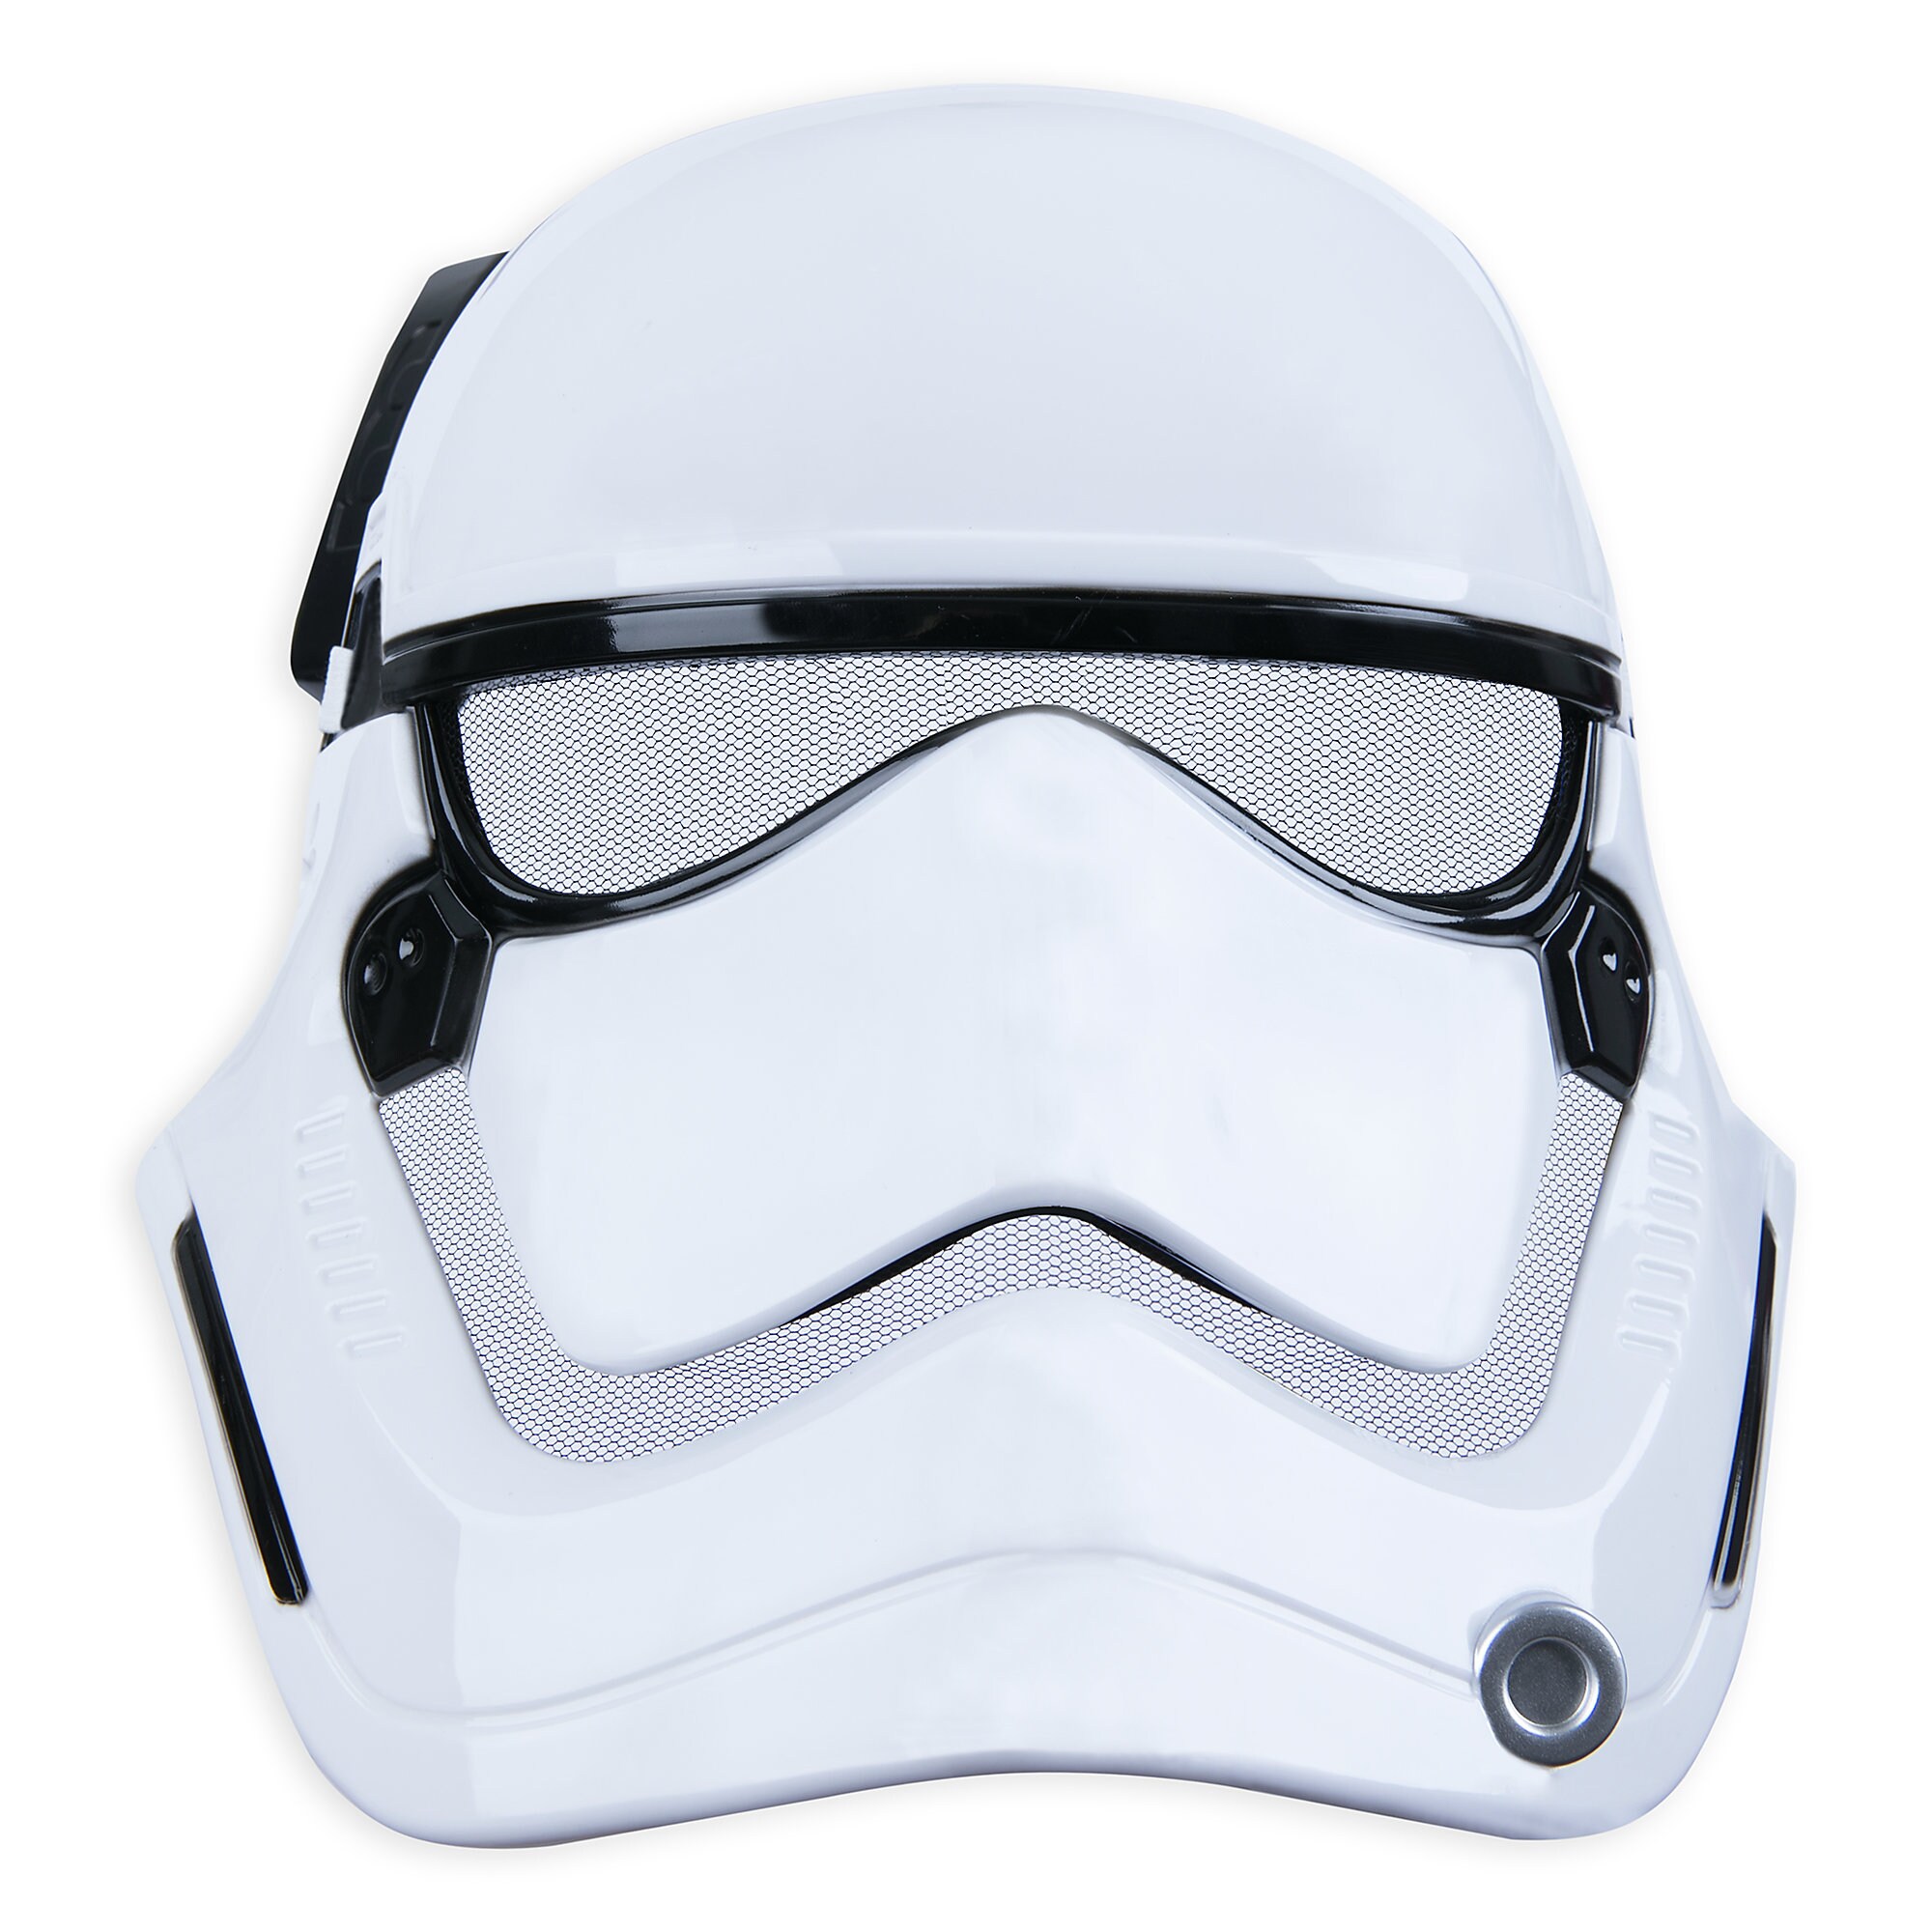 Stormtrooper Costume for Kids - Star Wars